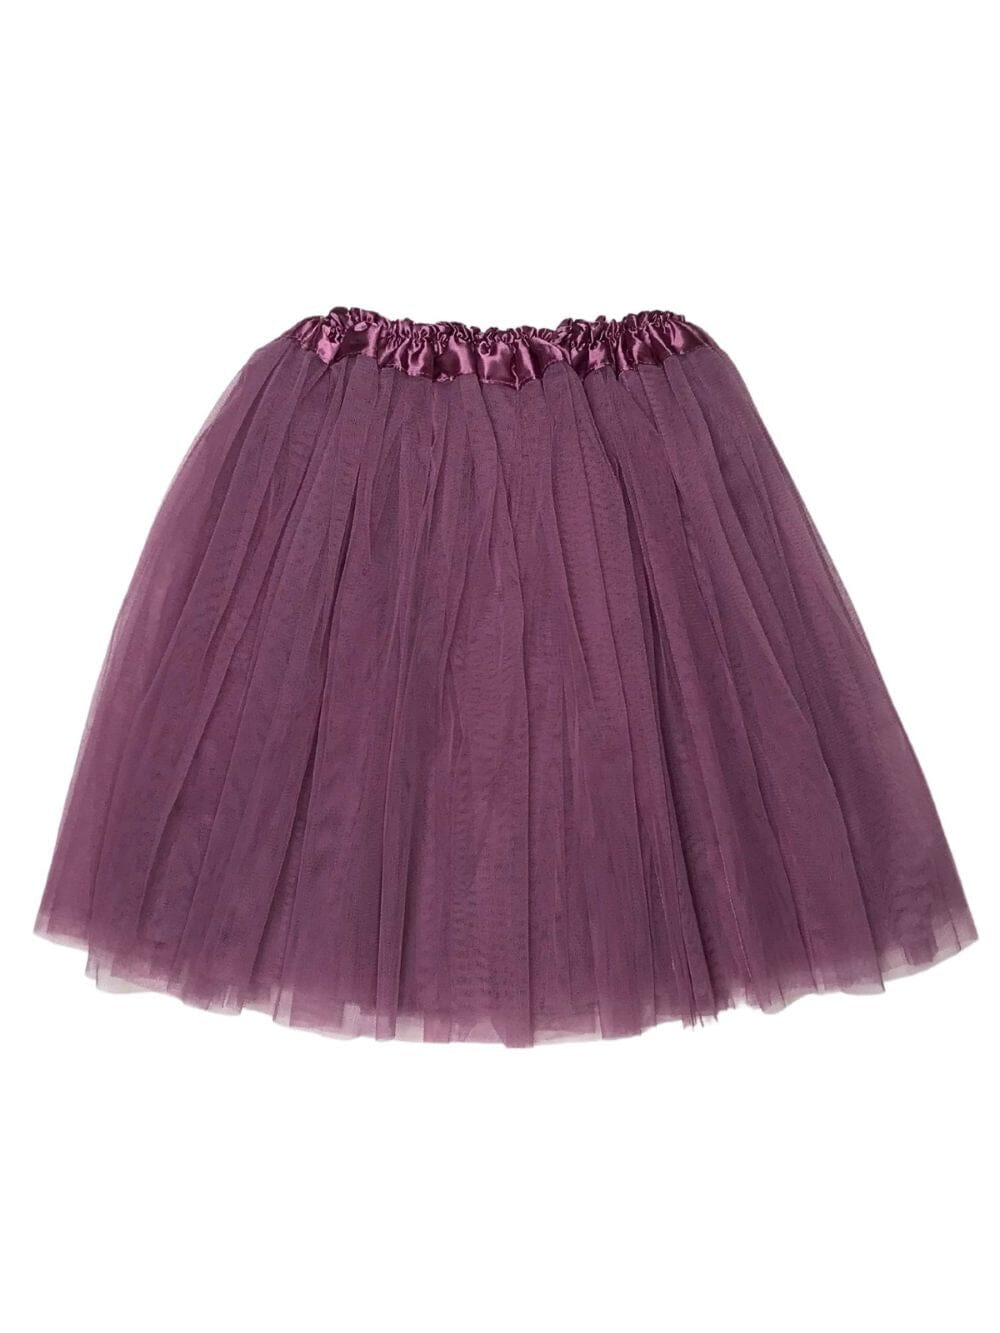 Plum Plus Size Adult Tutu Skirt - Women's Plus Size 3- Layer Basic Ballet Costume Dance Tutus - Sydney So Sweet